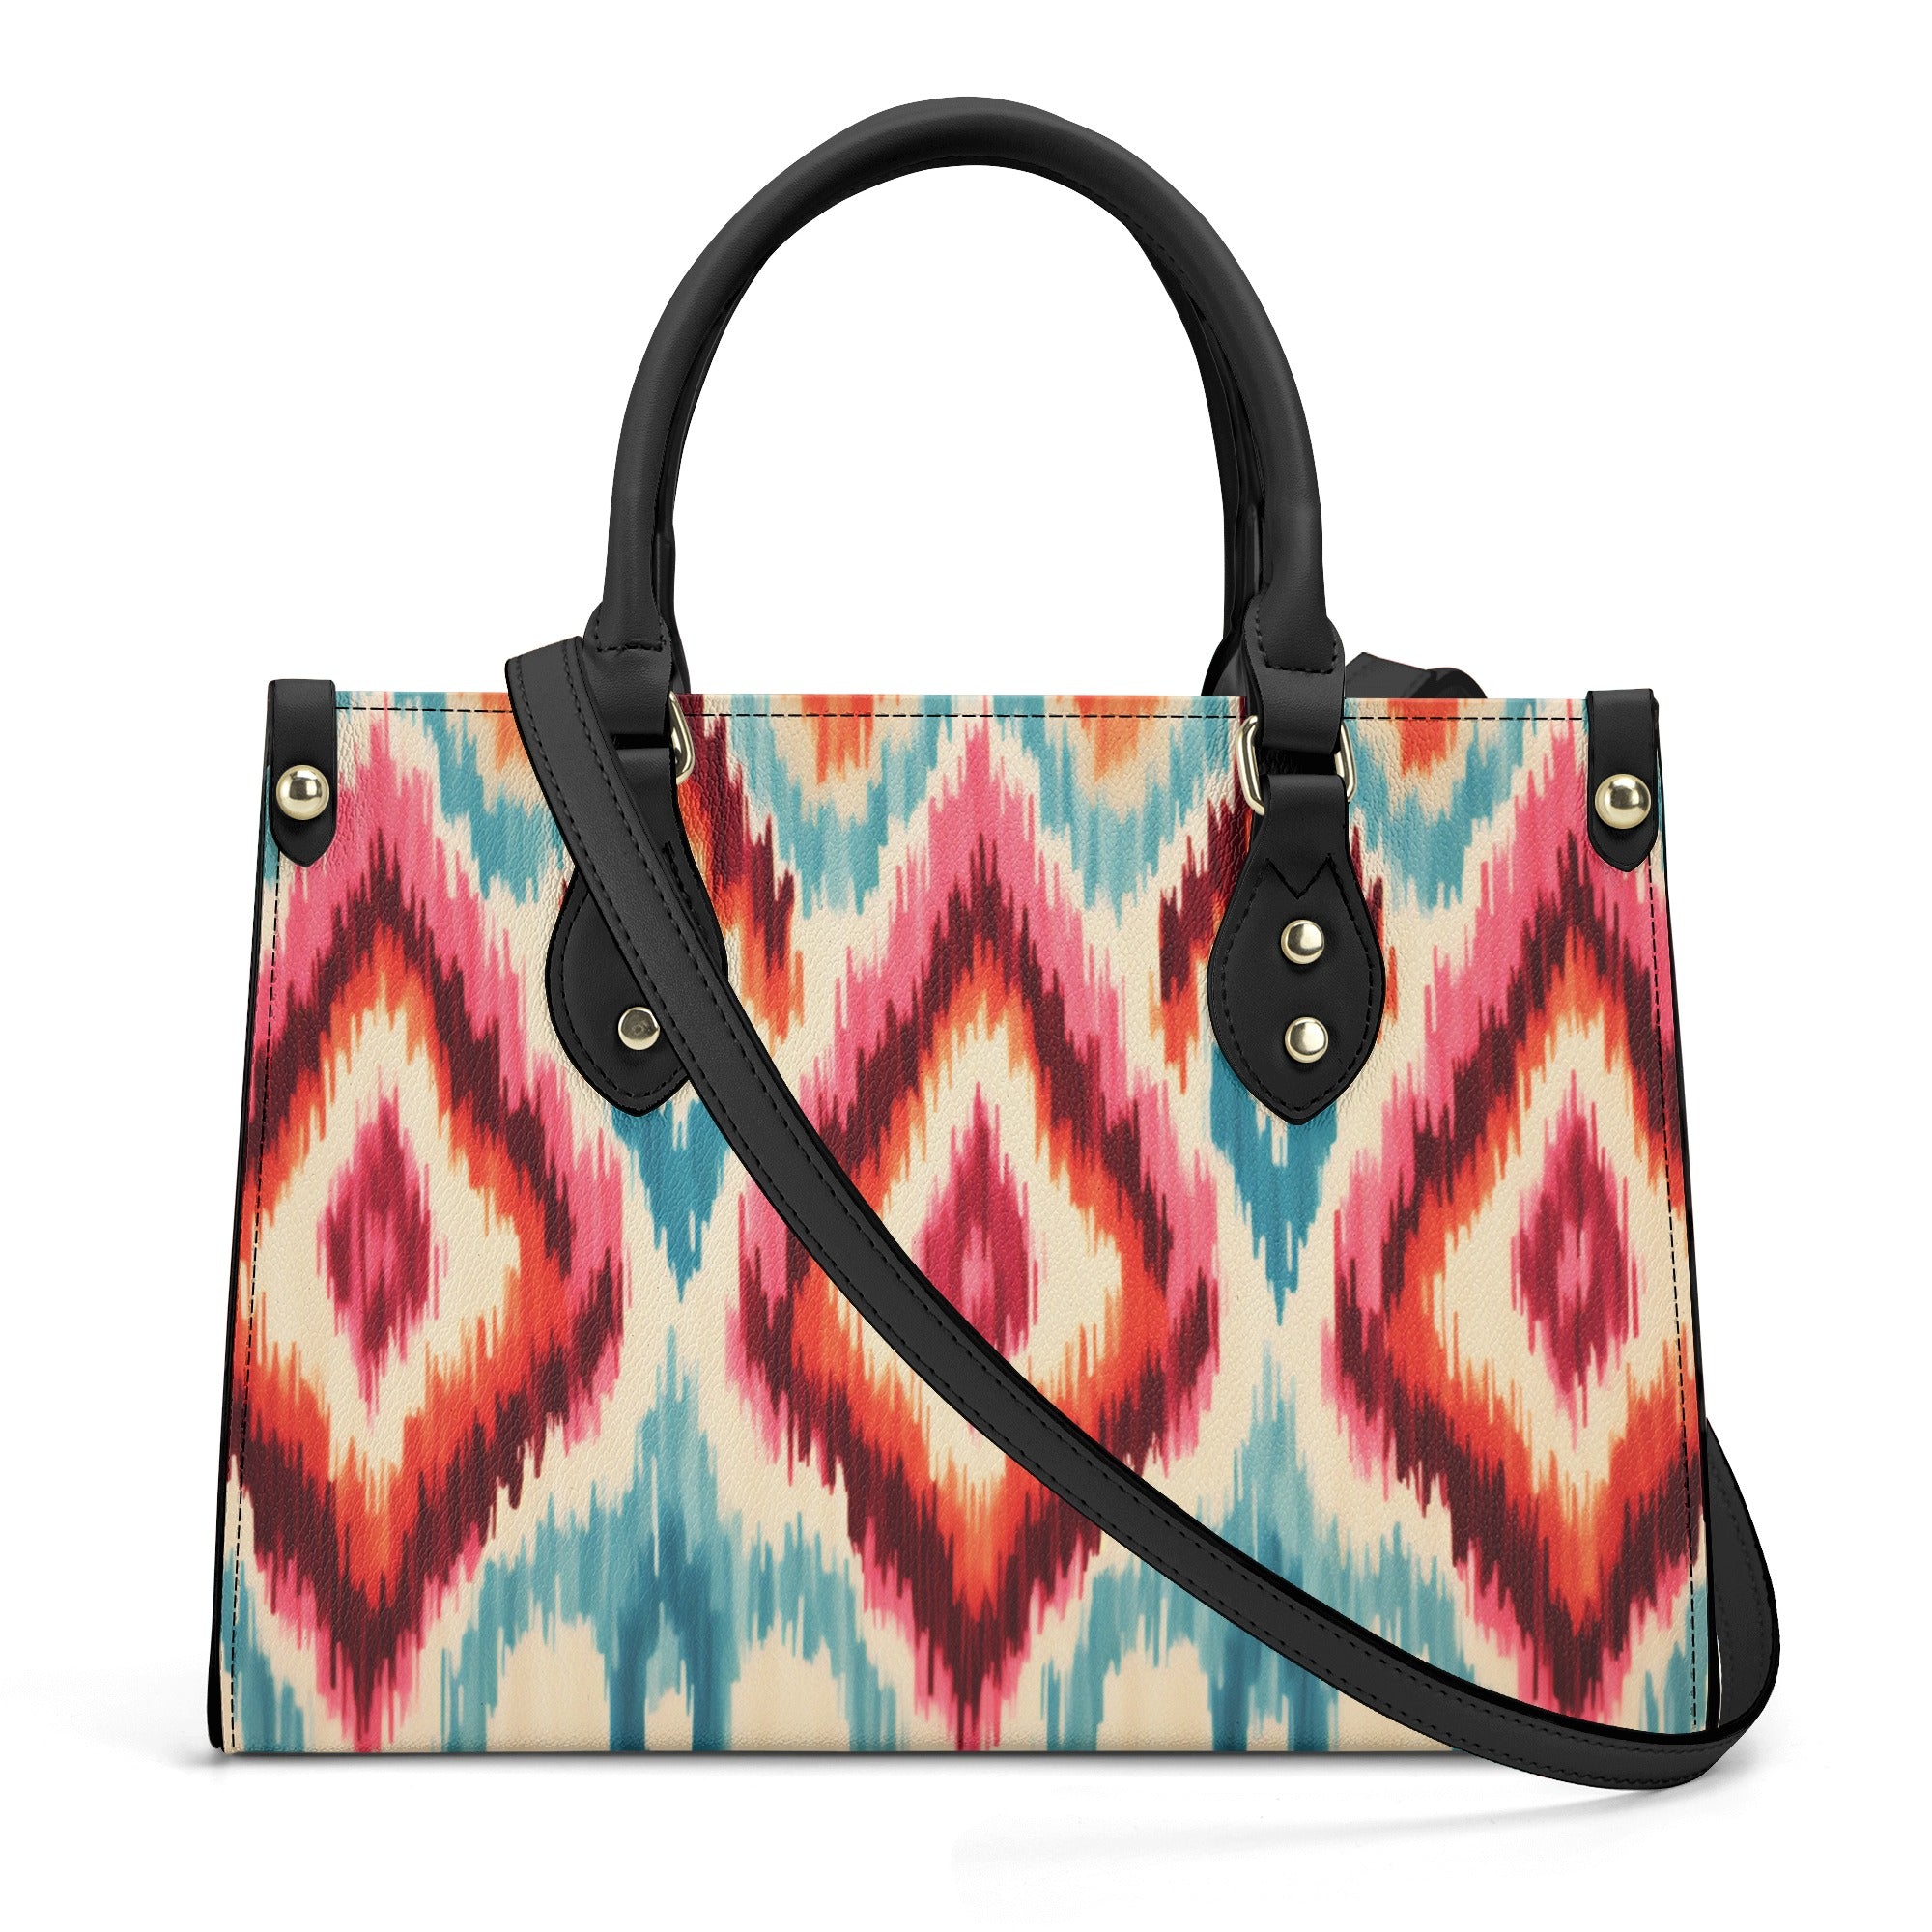 Ikat Essence Leather Handbag - Vibrant & Chic